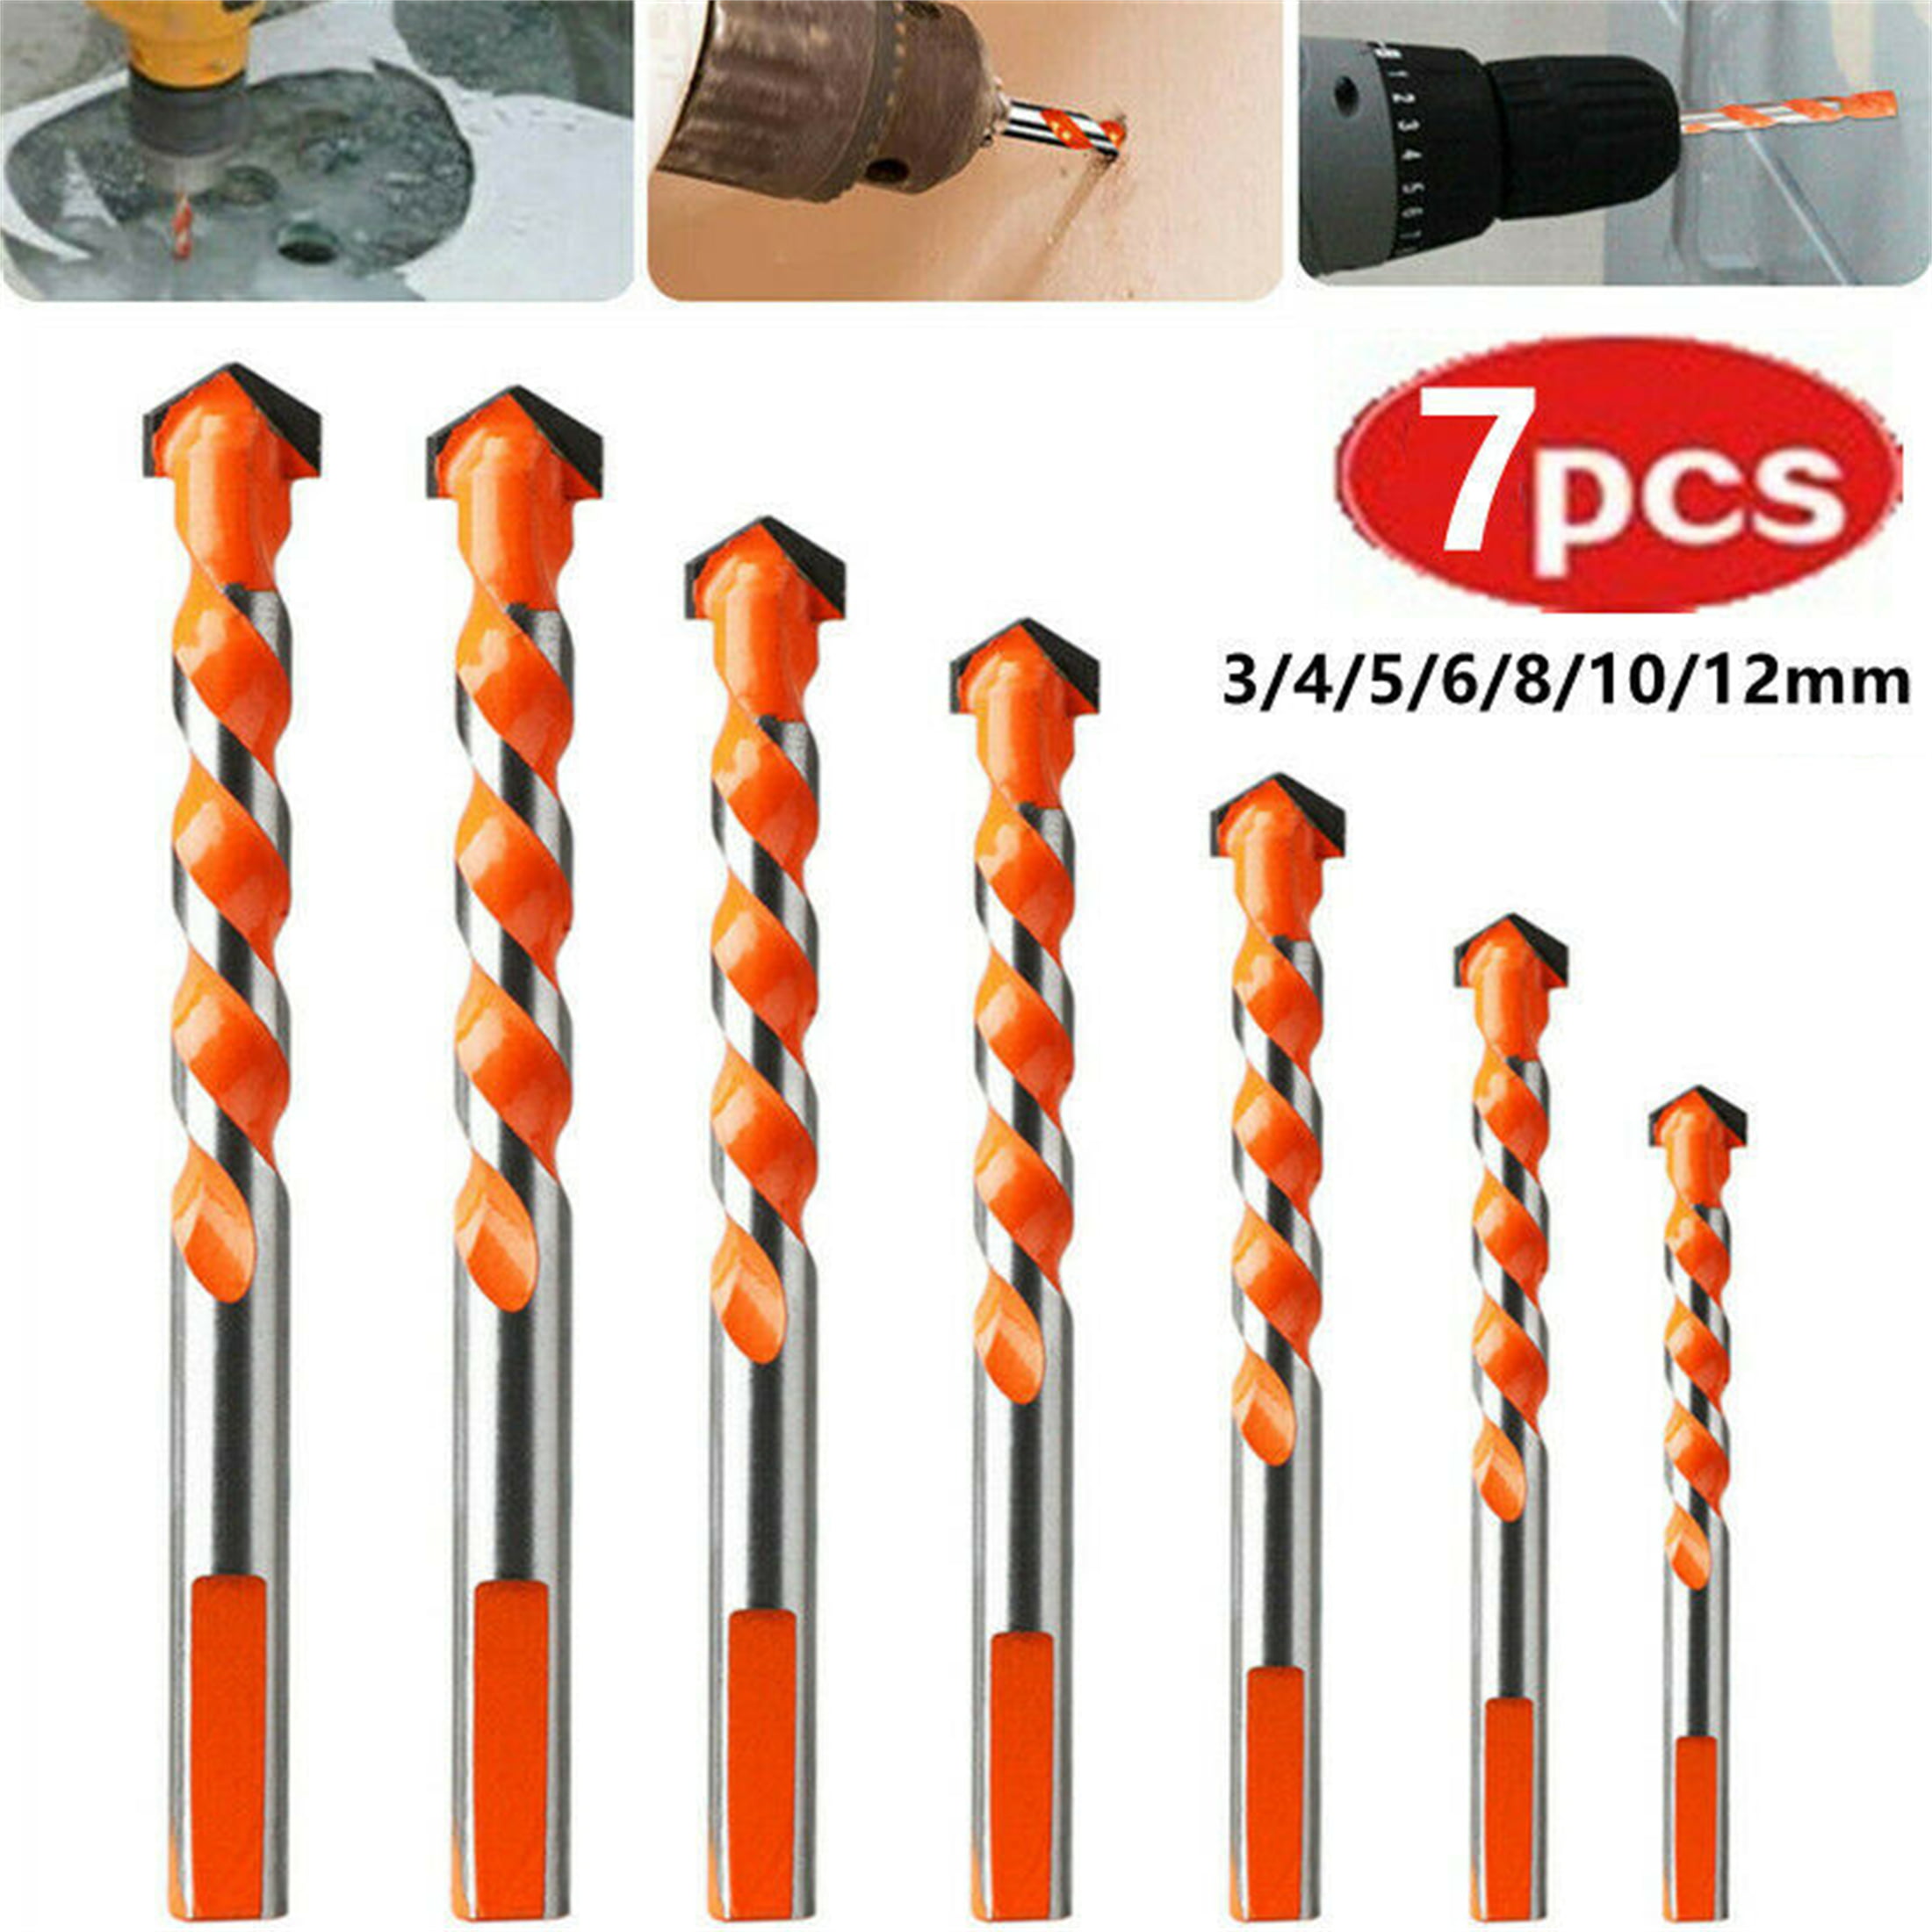 7PCS Ultimate Drill Bits Multifunctional Ceramic Glass Punching Hole Working Set 